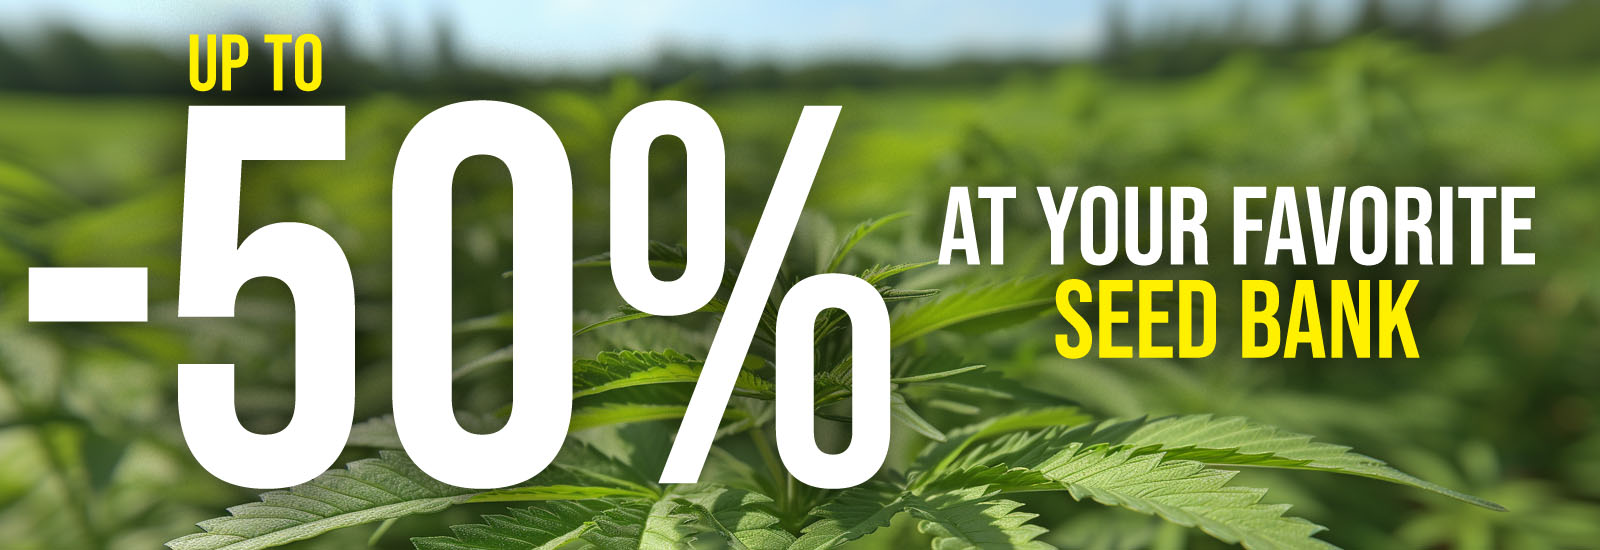 Cannabis seeds discounts